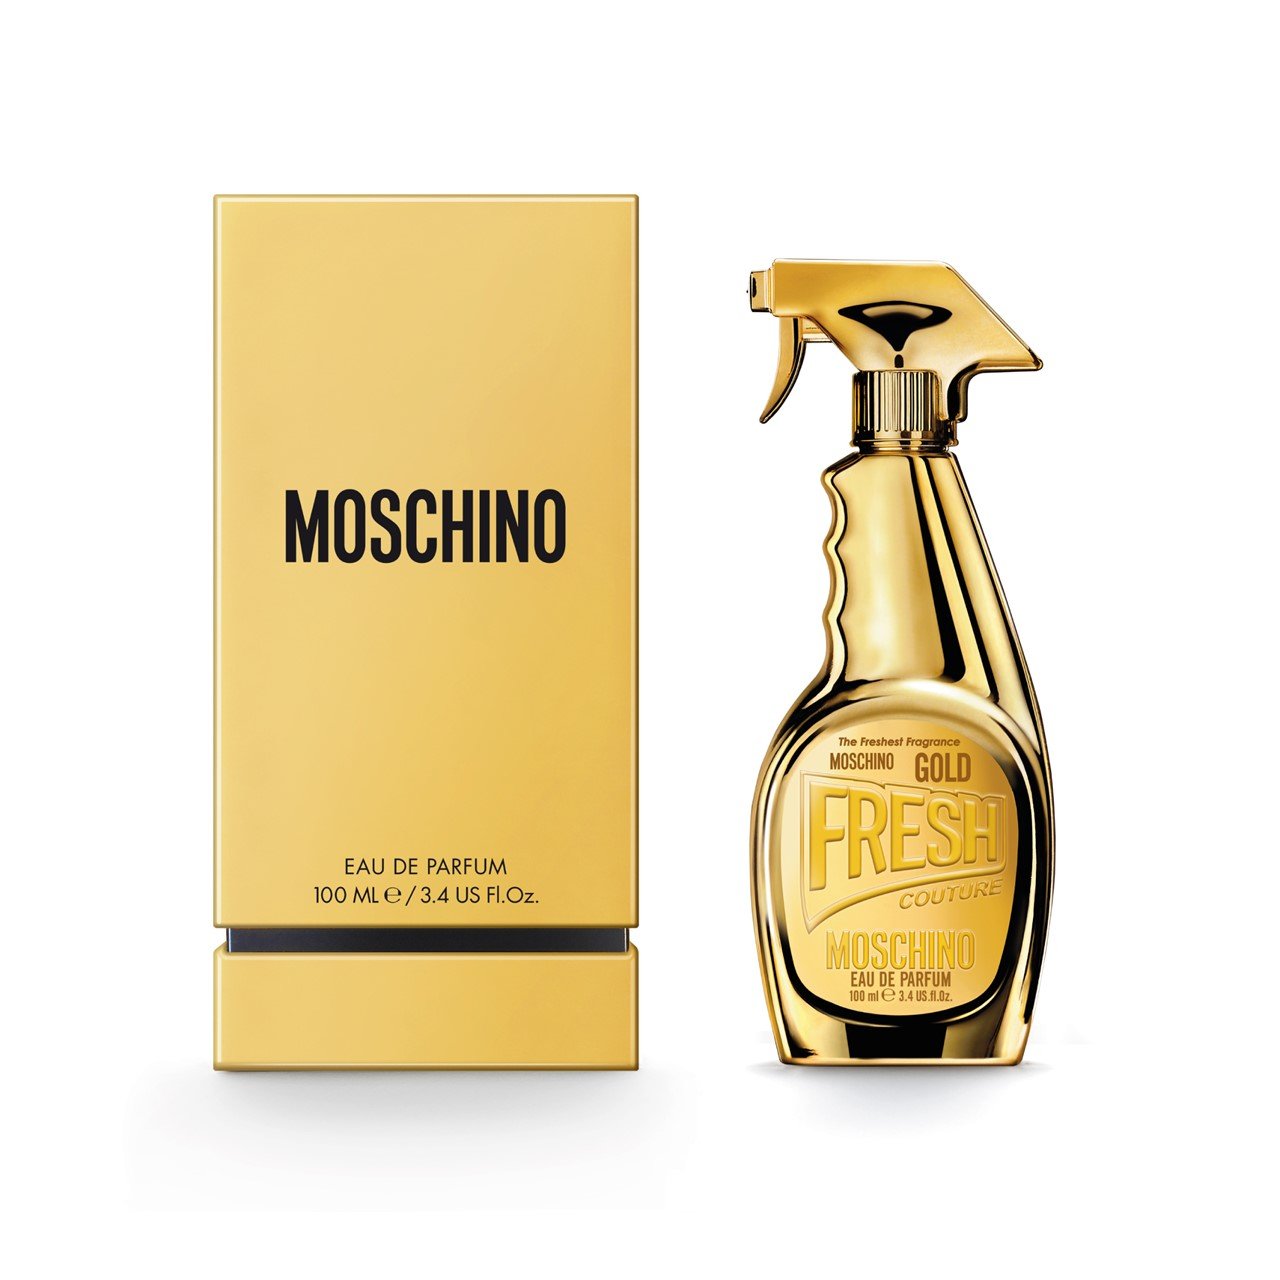 Moschino Gold Fresh Couture Eau de Parfum 100ml (3.4fl.oz.)